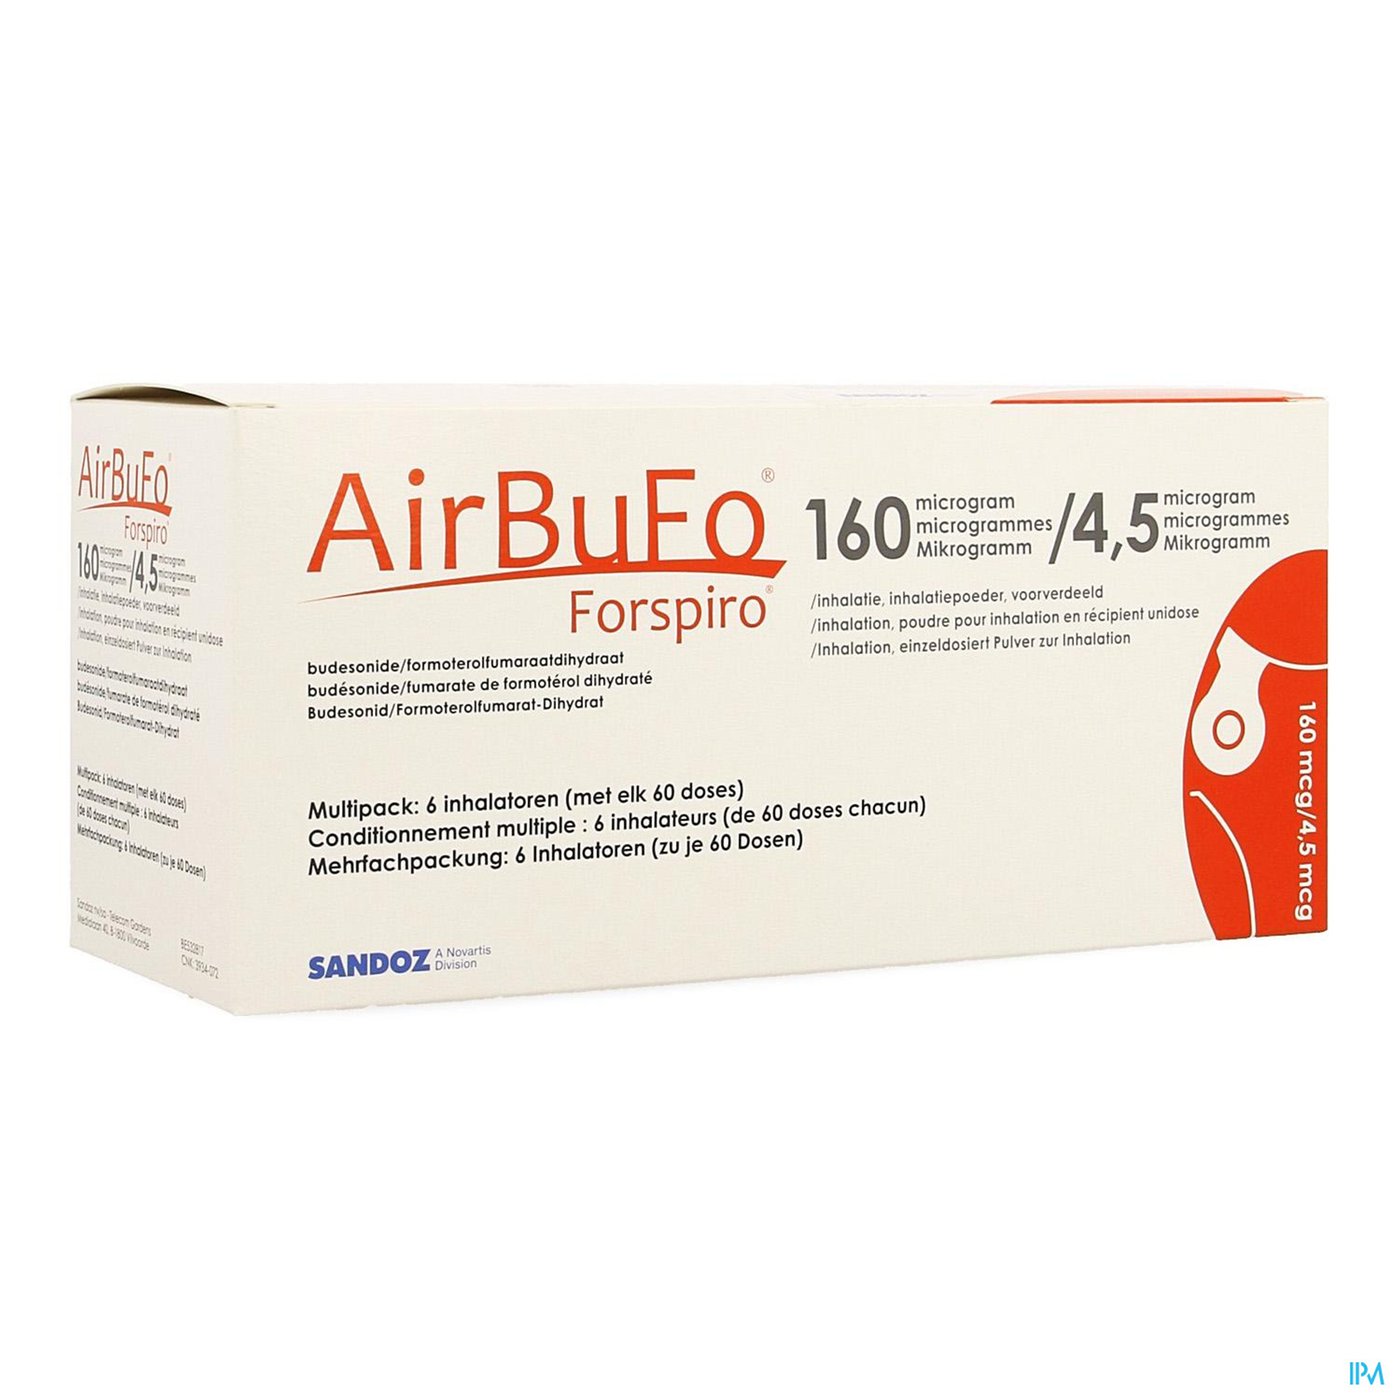 Airbufo Forspiro 160mcg/4,5mcg Inhal. 6 X 60dosis packshot